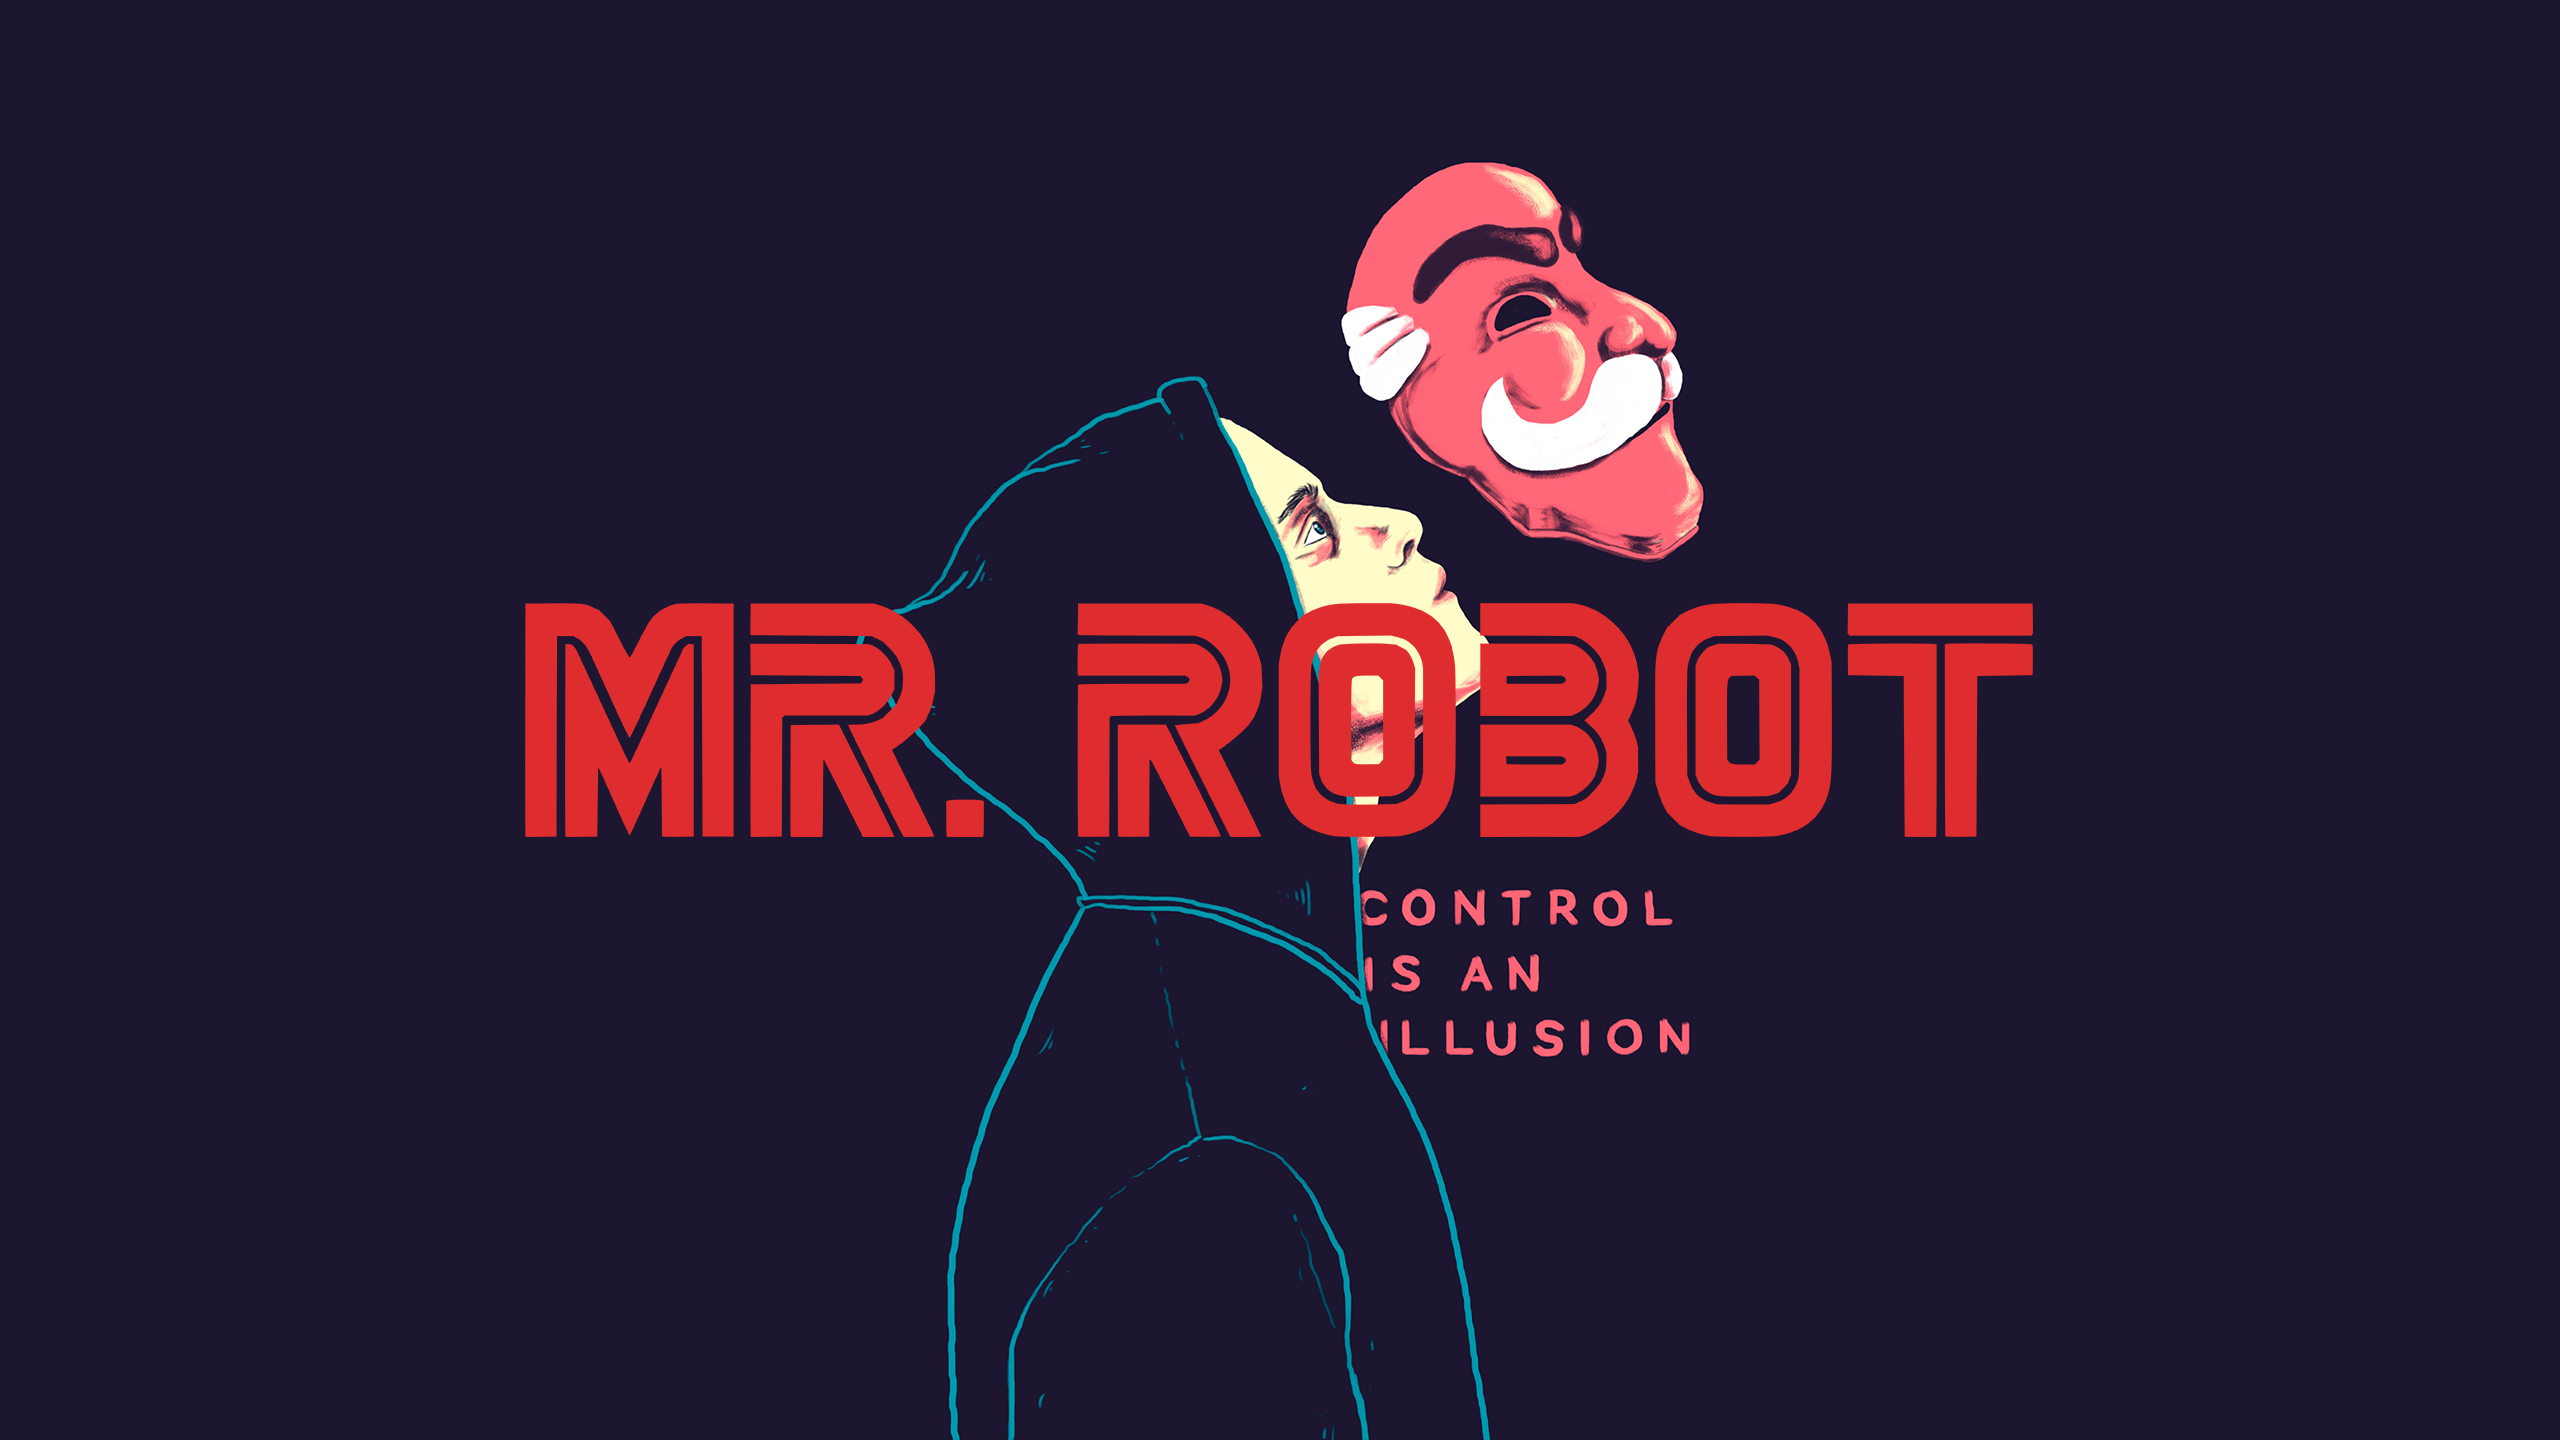 General 2560x1440 Mr. Robot Elliot (Mr. Robot) fsociety illustration Henrique Petrus Rami Malek fan art mask simple background TV series